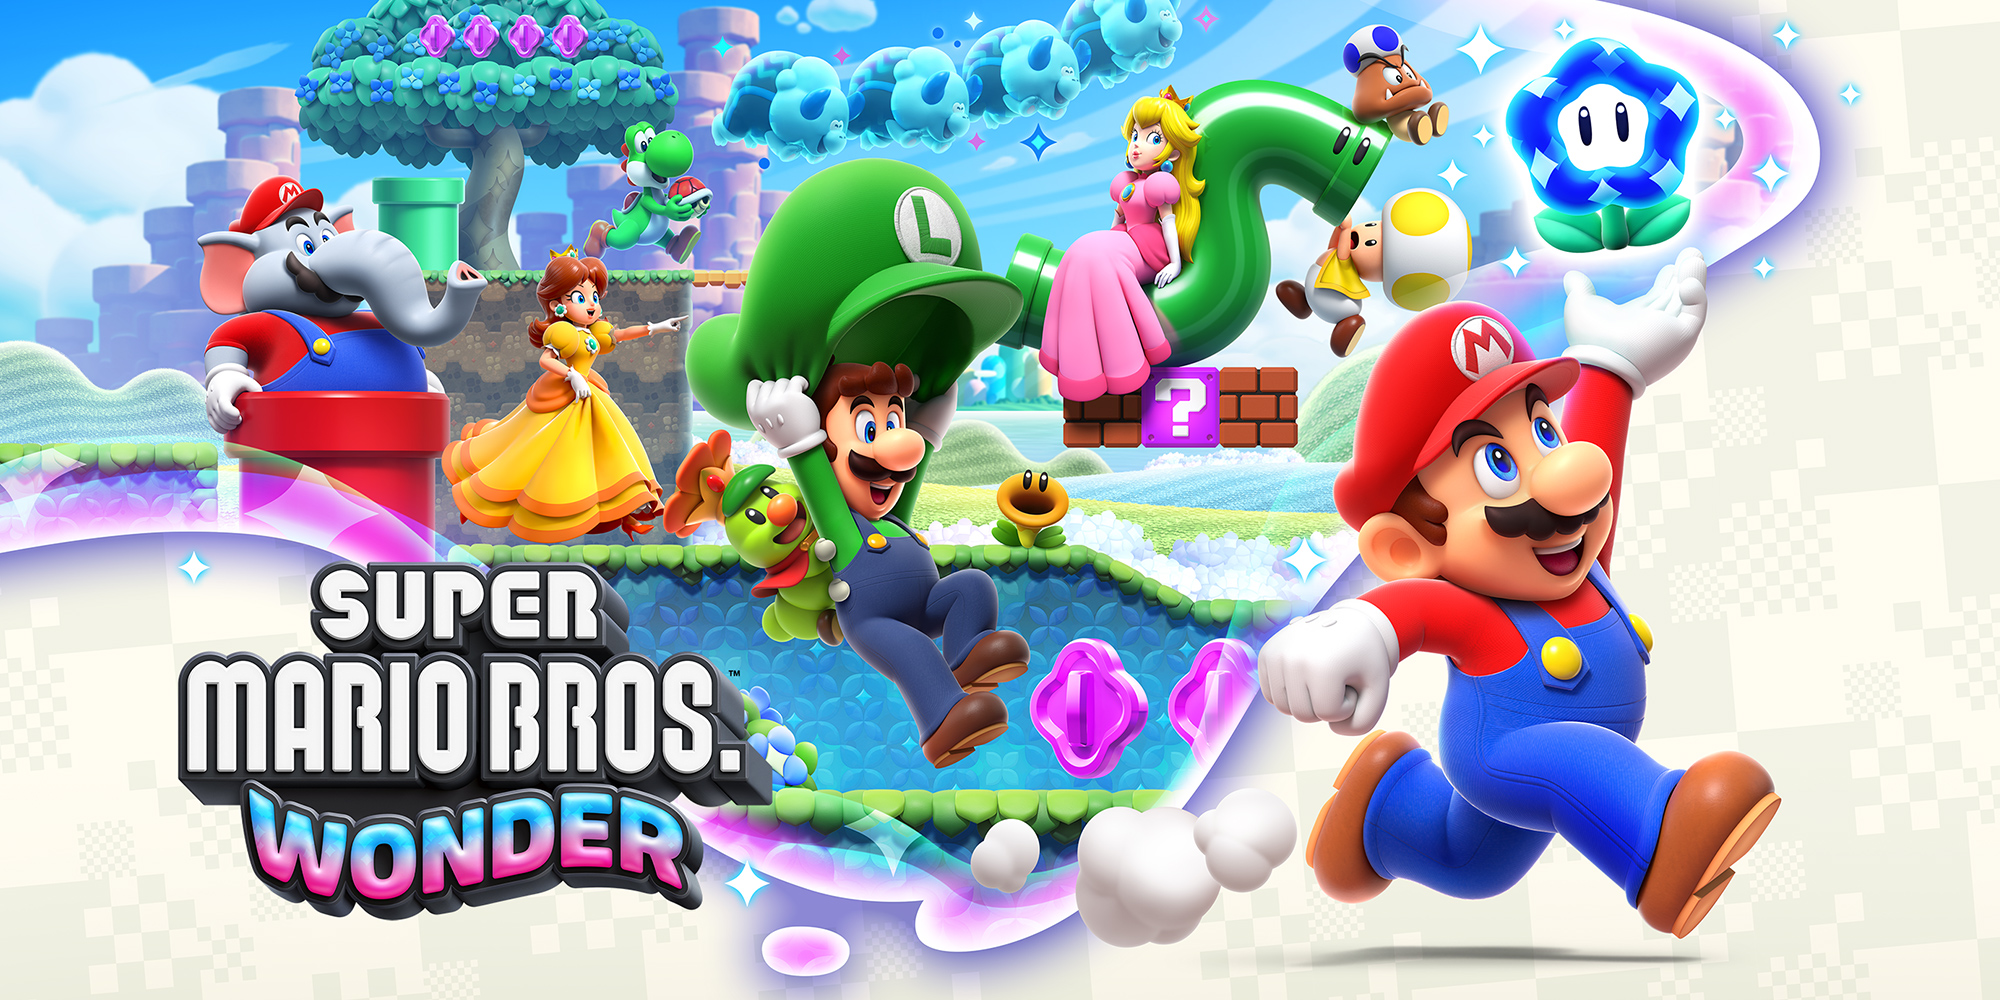 Super Mario Game Online Super Mario Bros. Wonder | Nintendo Switch games | Games | Nintendo